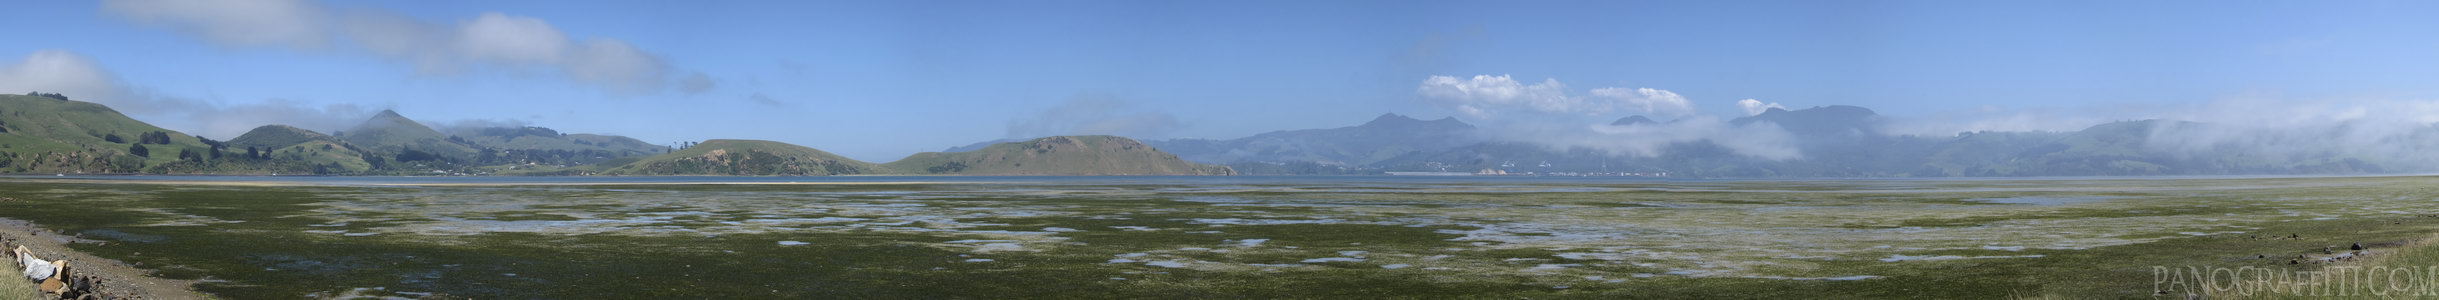 Marshy Portobello Bay on the Otago Peninsula - Stitched Panorama